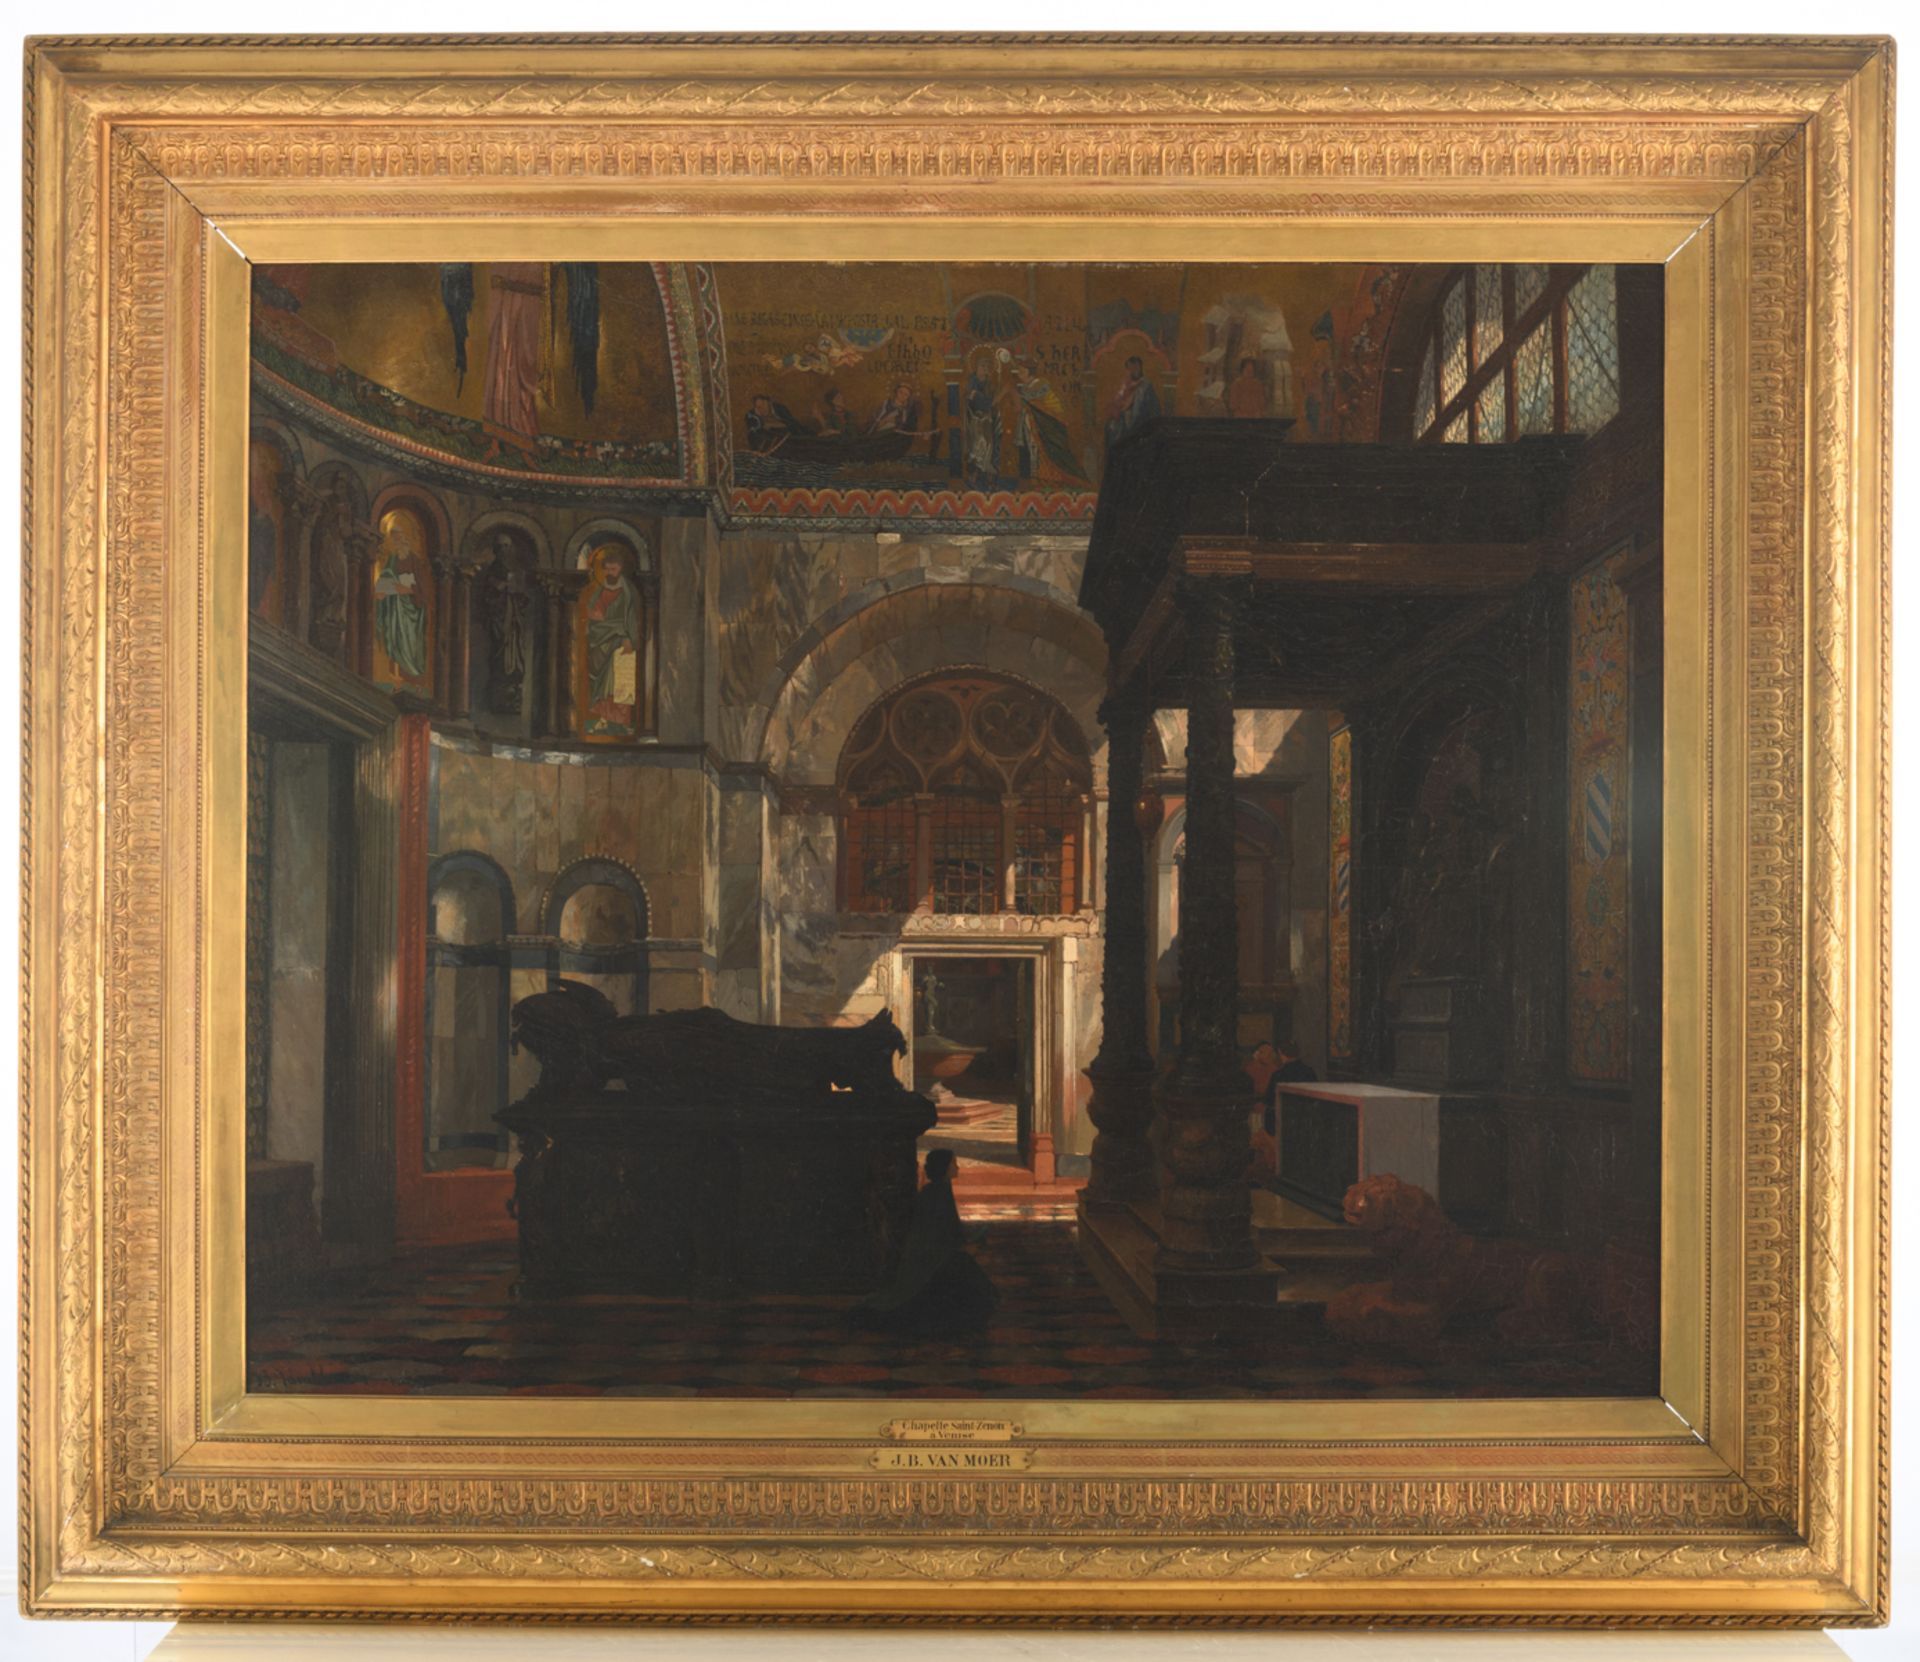 Van Moer G.B., The Saint Zeno chapel in the basilica San Marco Venice, oil on canvas, 122 x 98 cm - Image 2 of 7